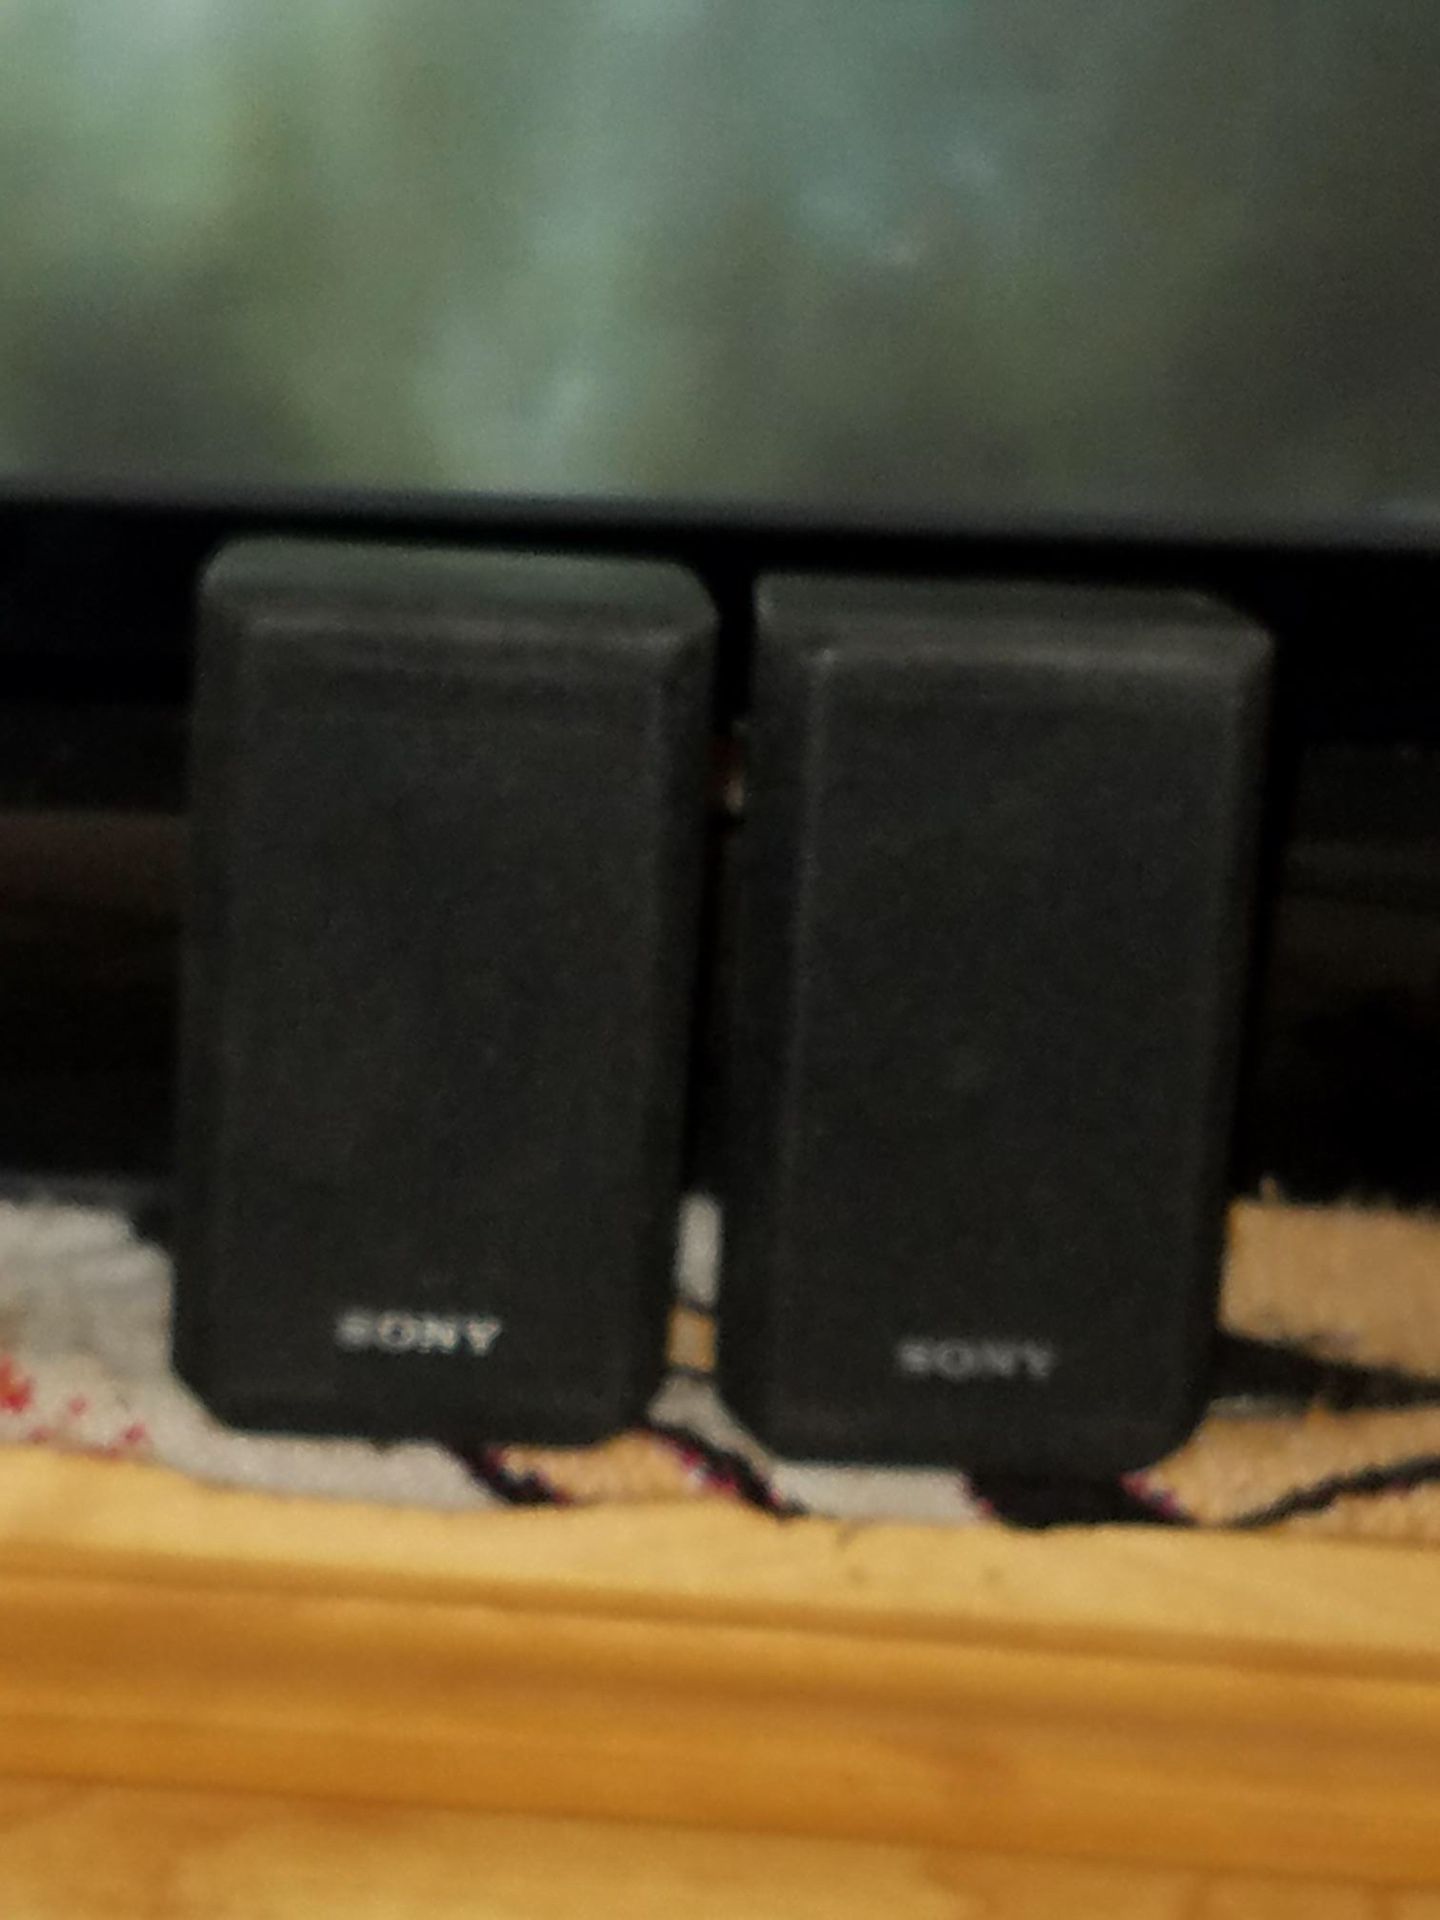 3 small Sony speakers